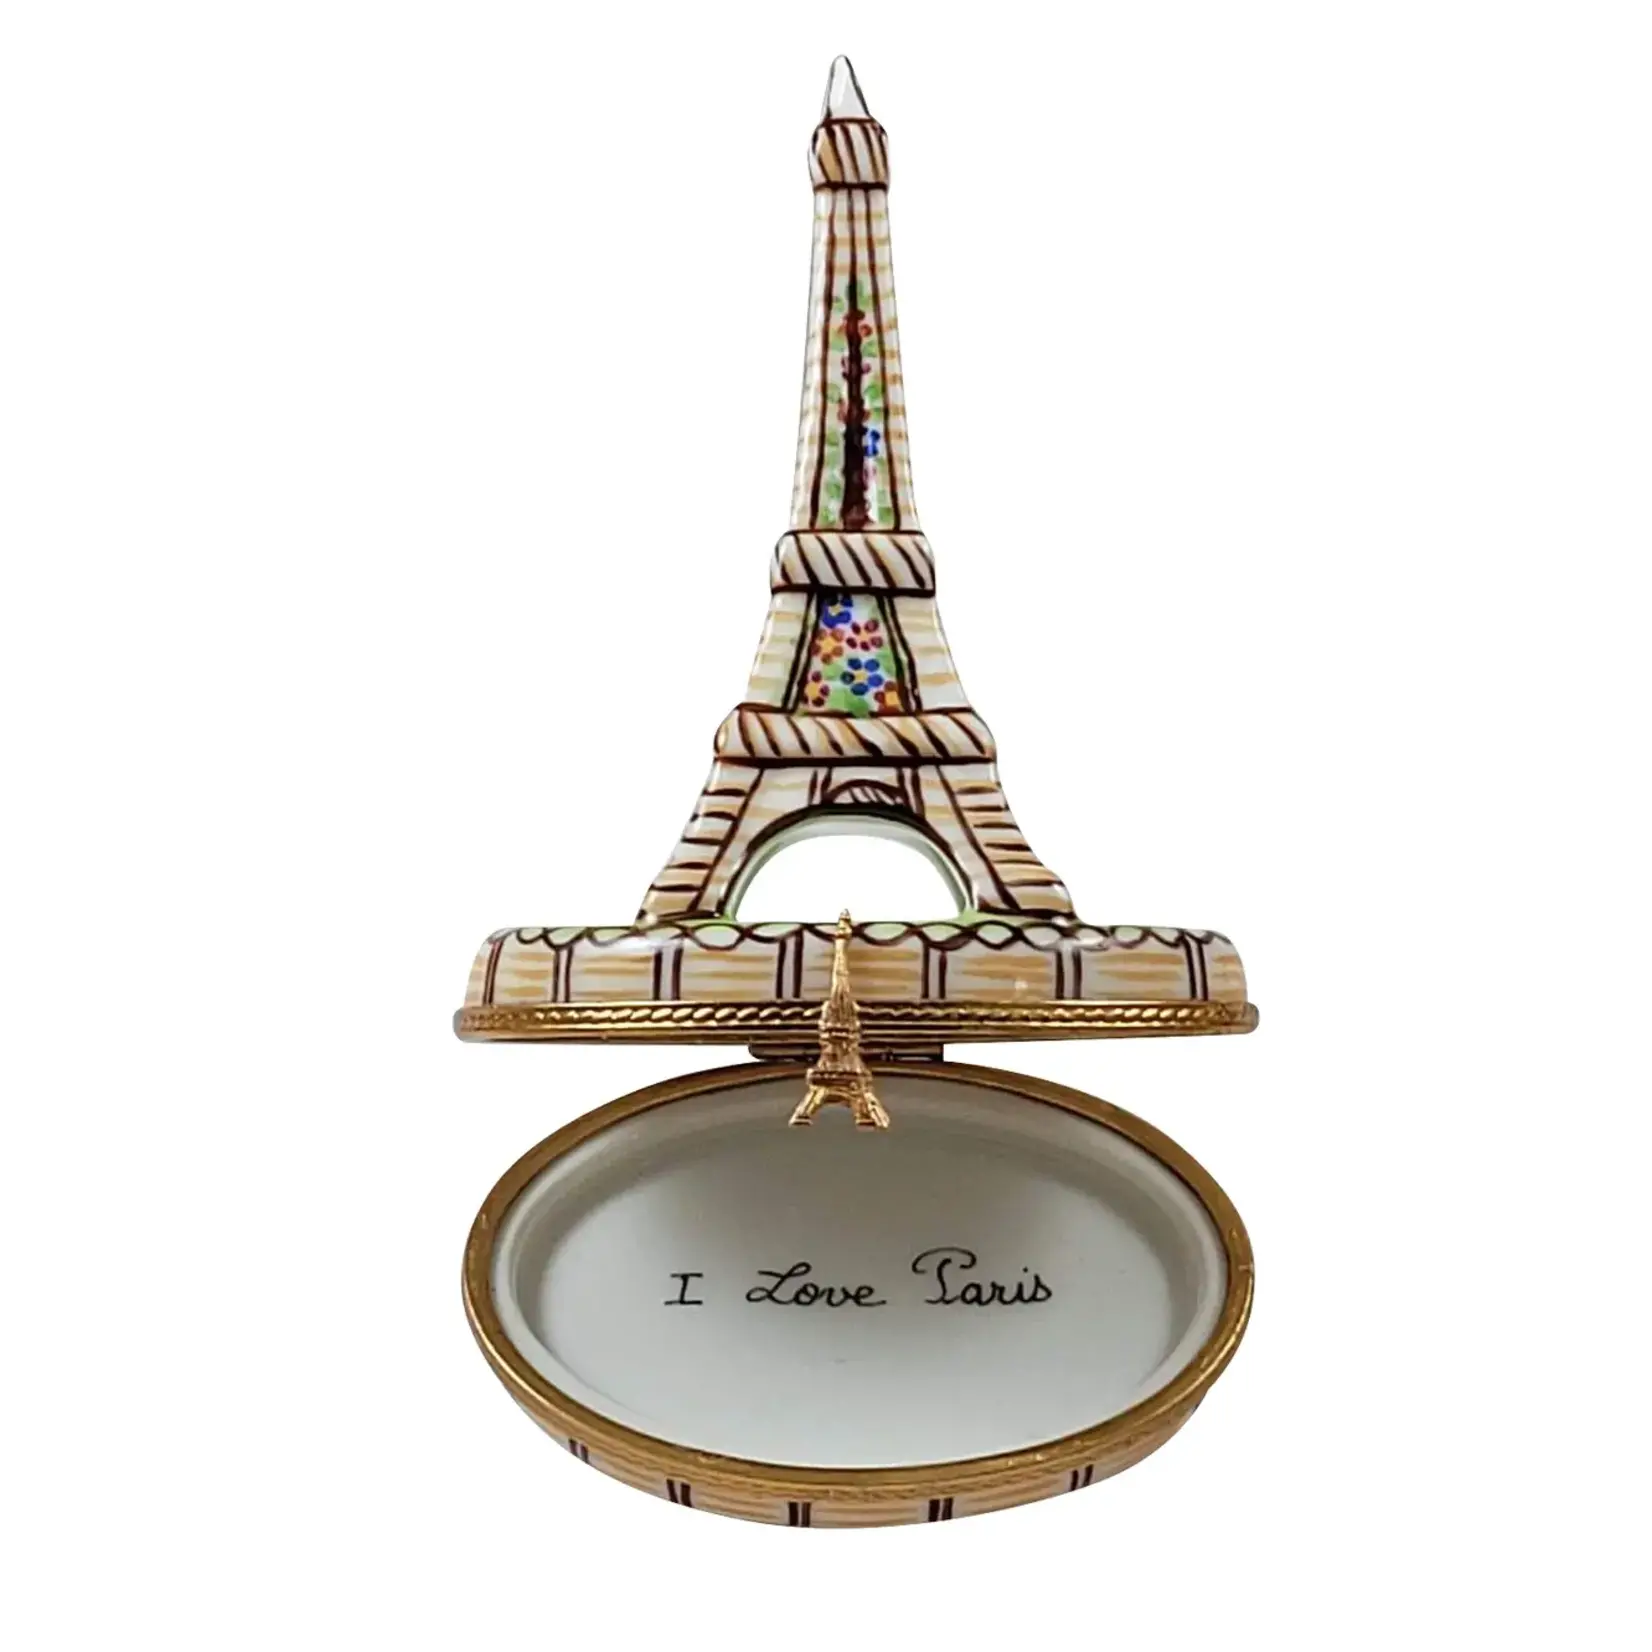 Rochard Limoges Brown Eiffel Tower - "I Love Paris" Painted Inside